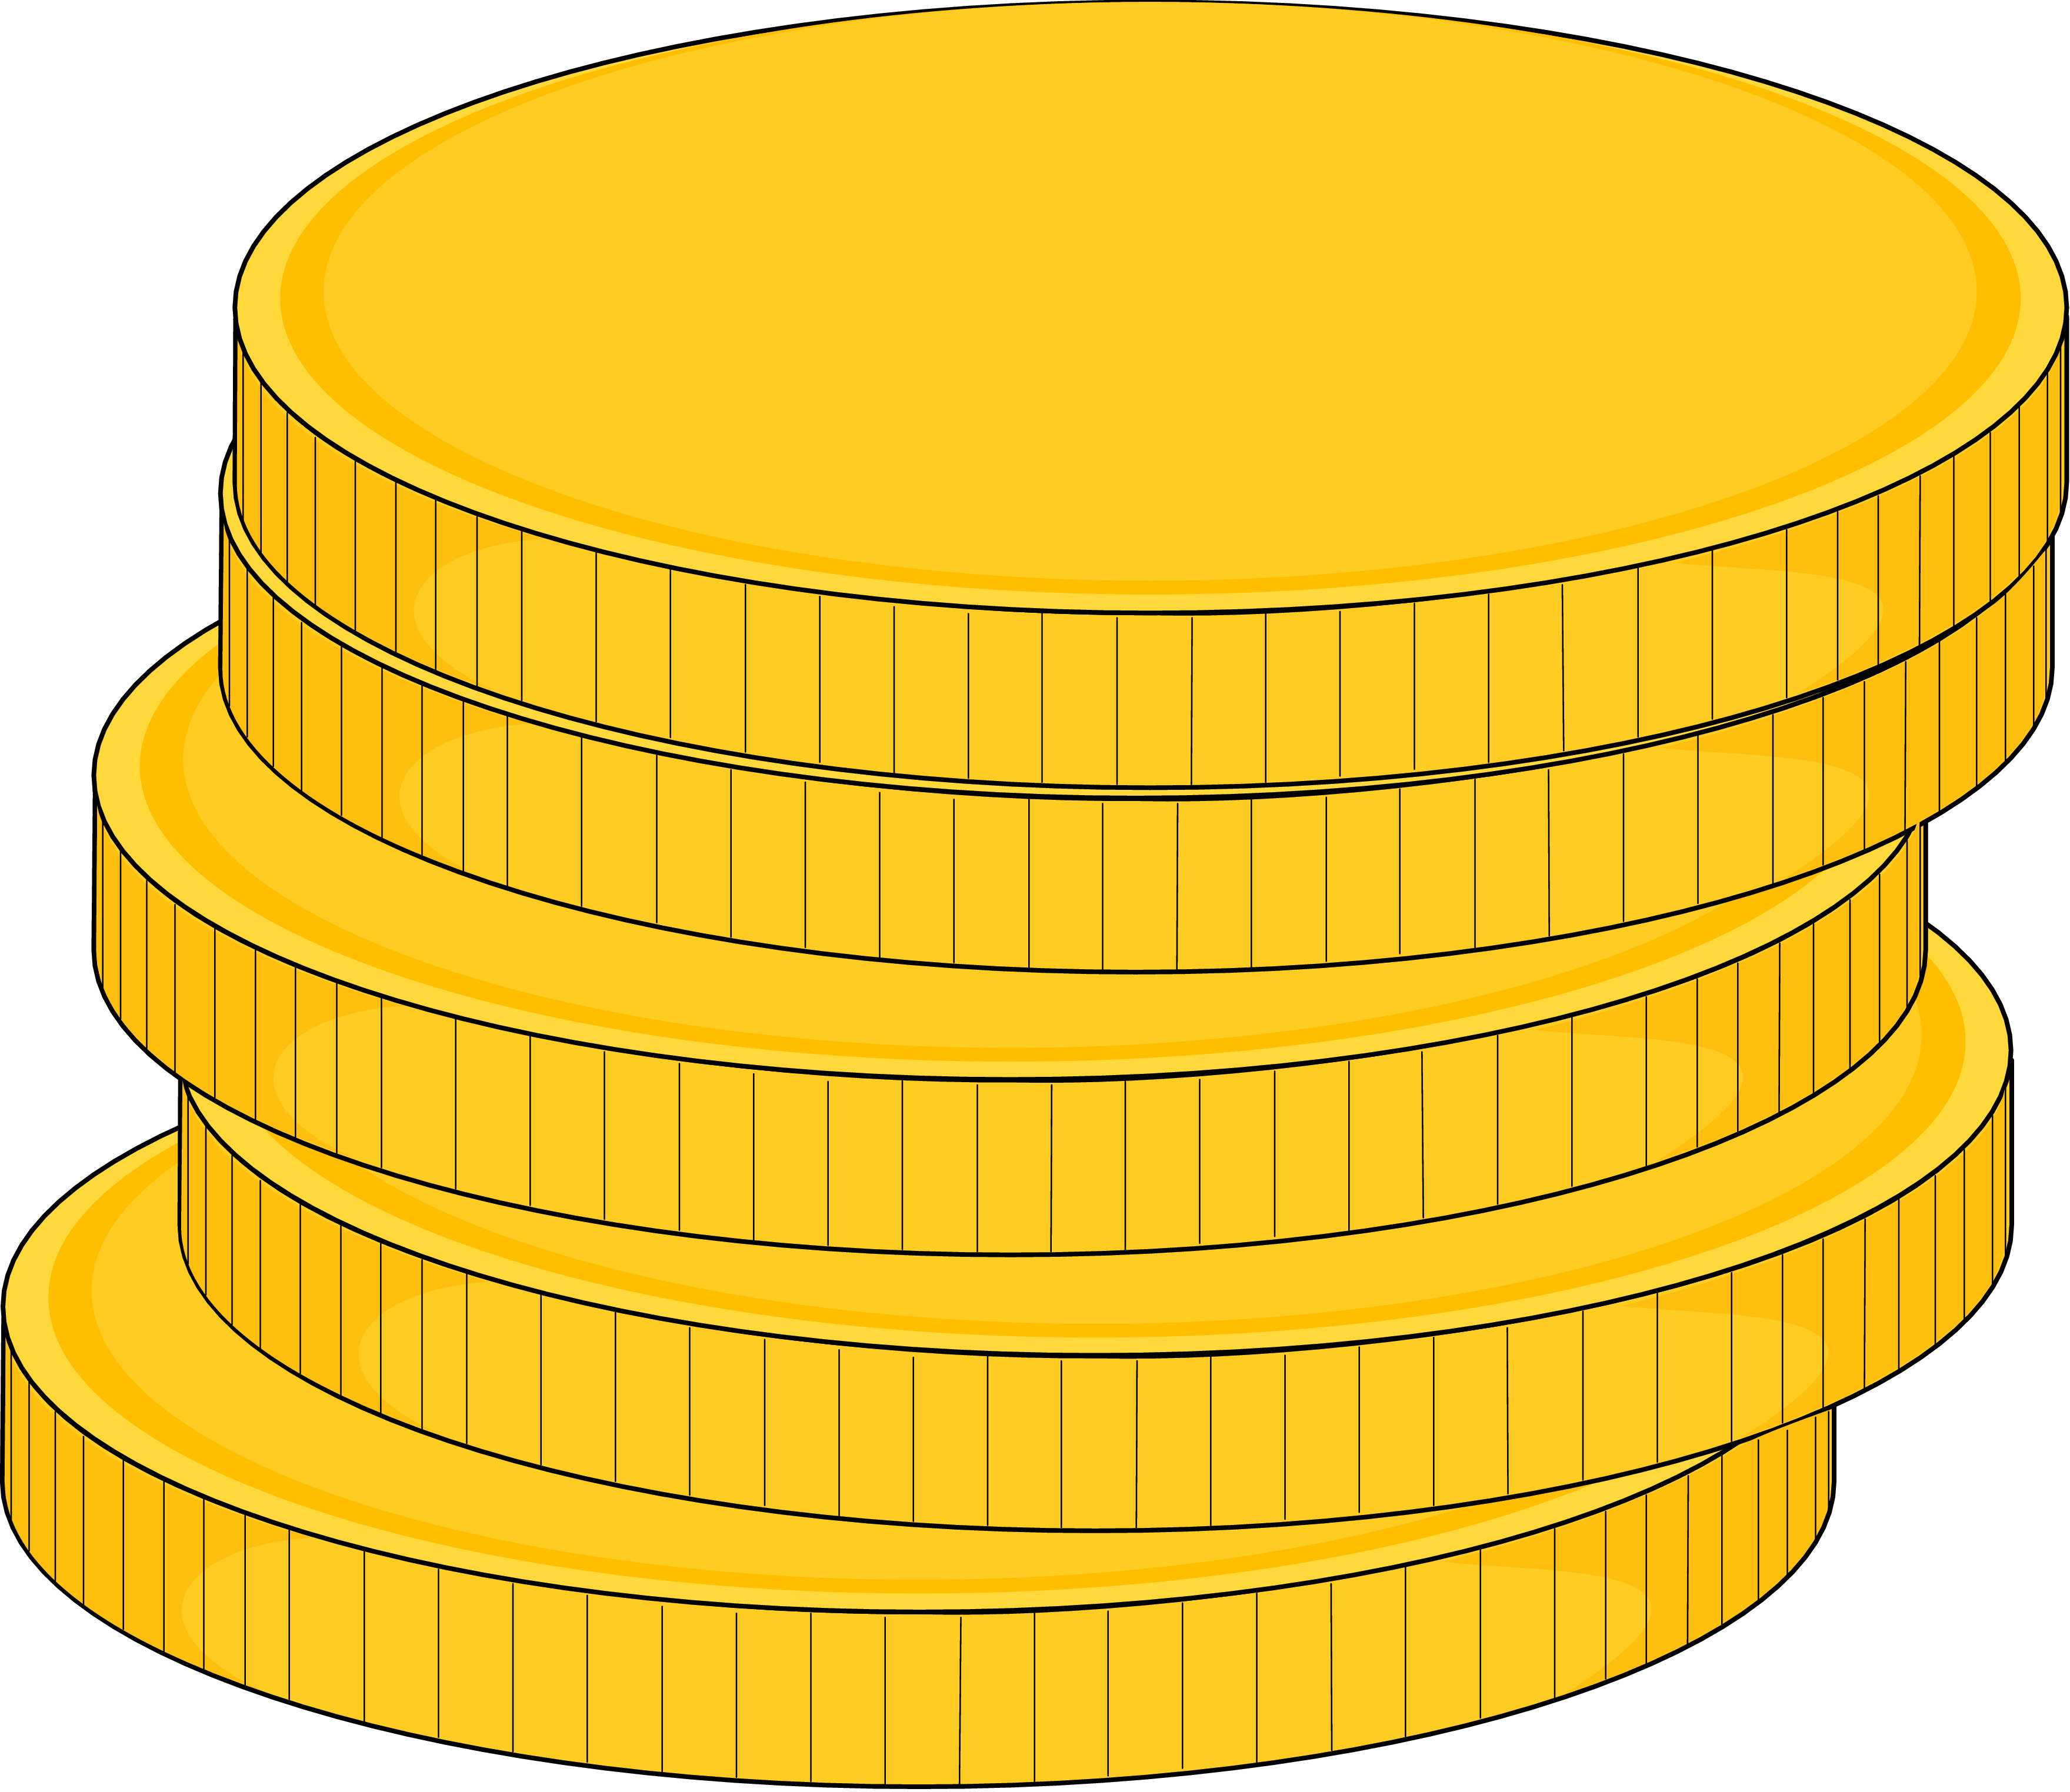 Amount of Monnaie